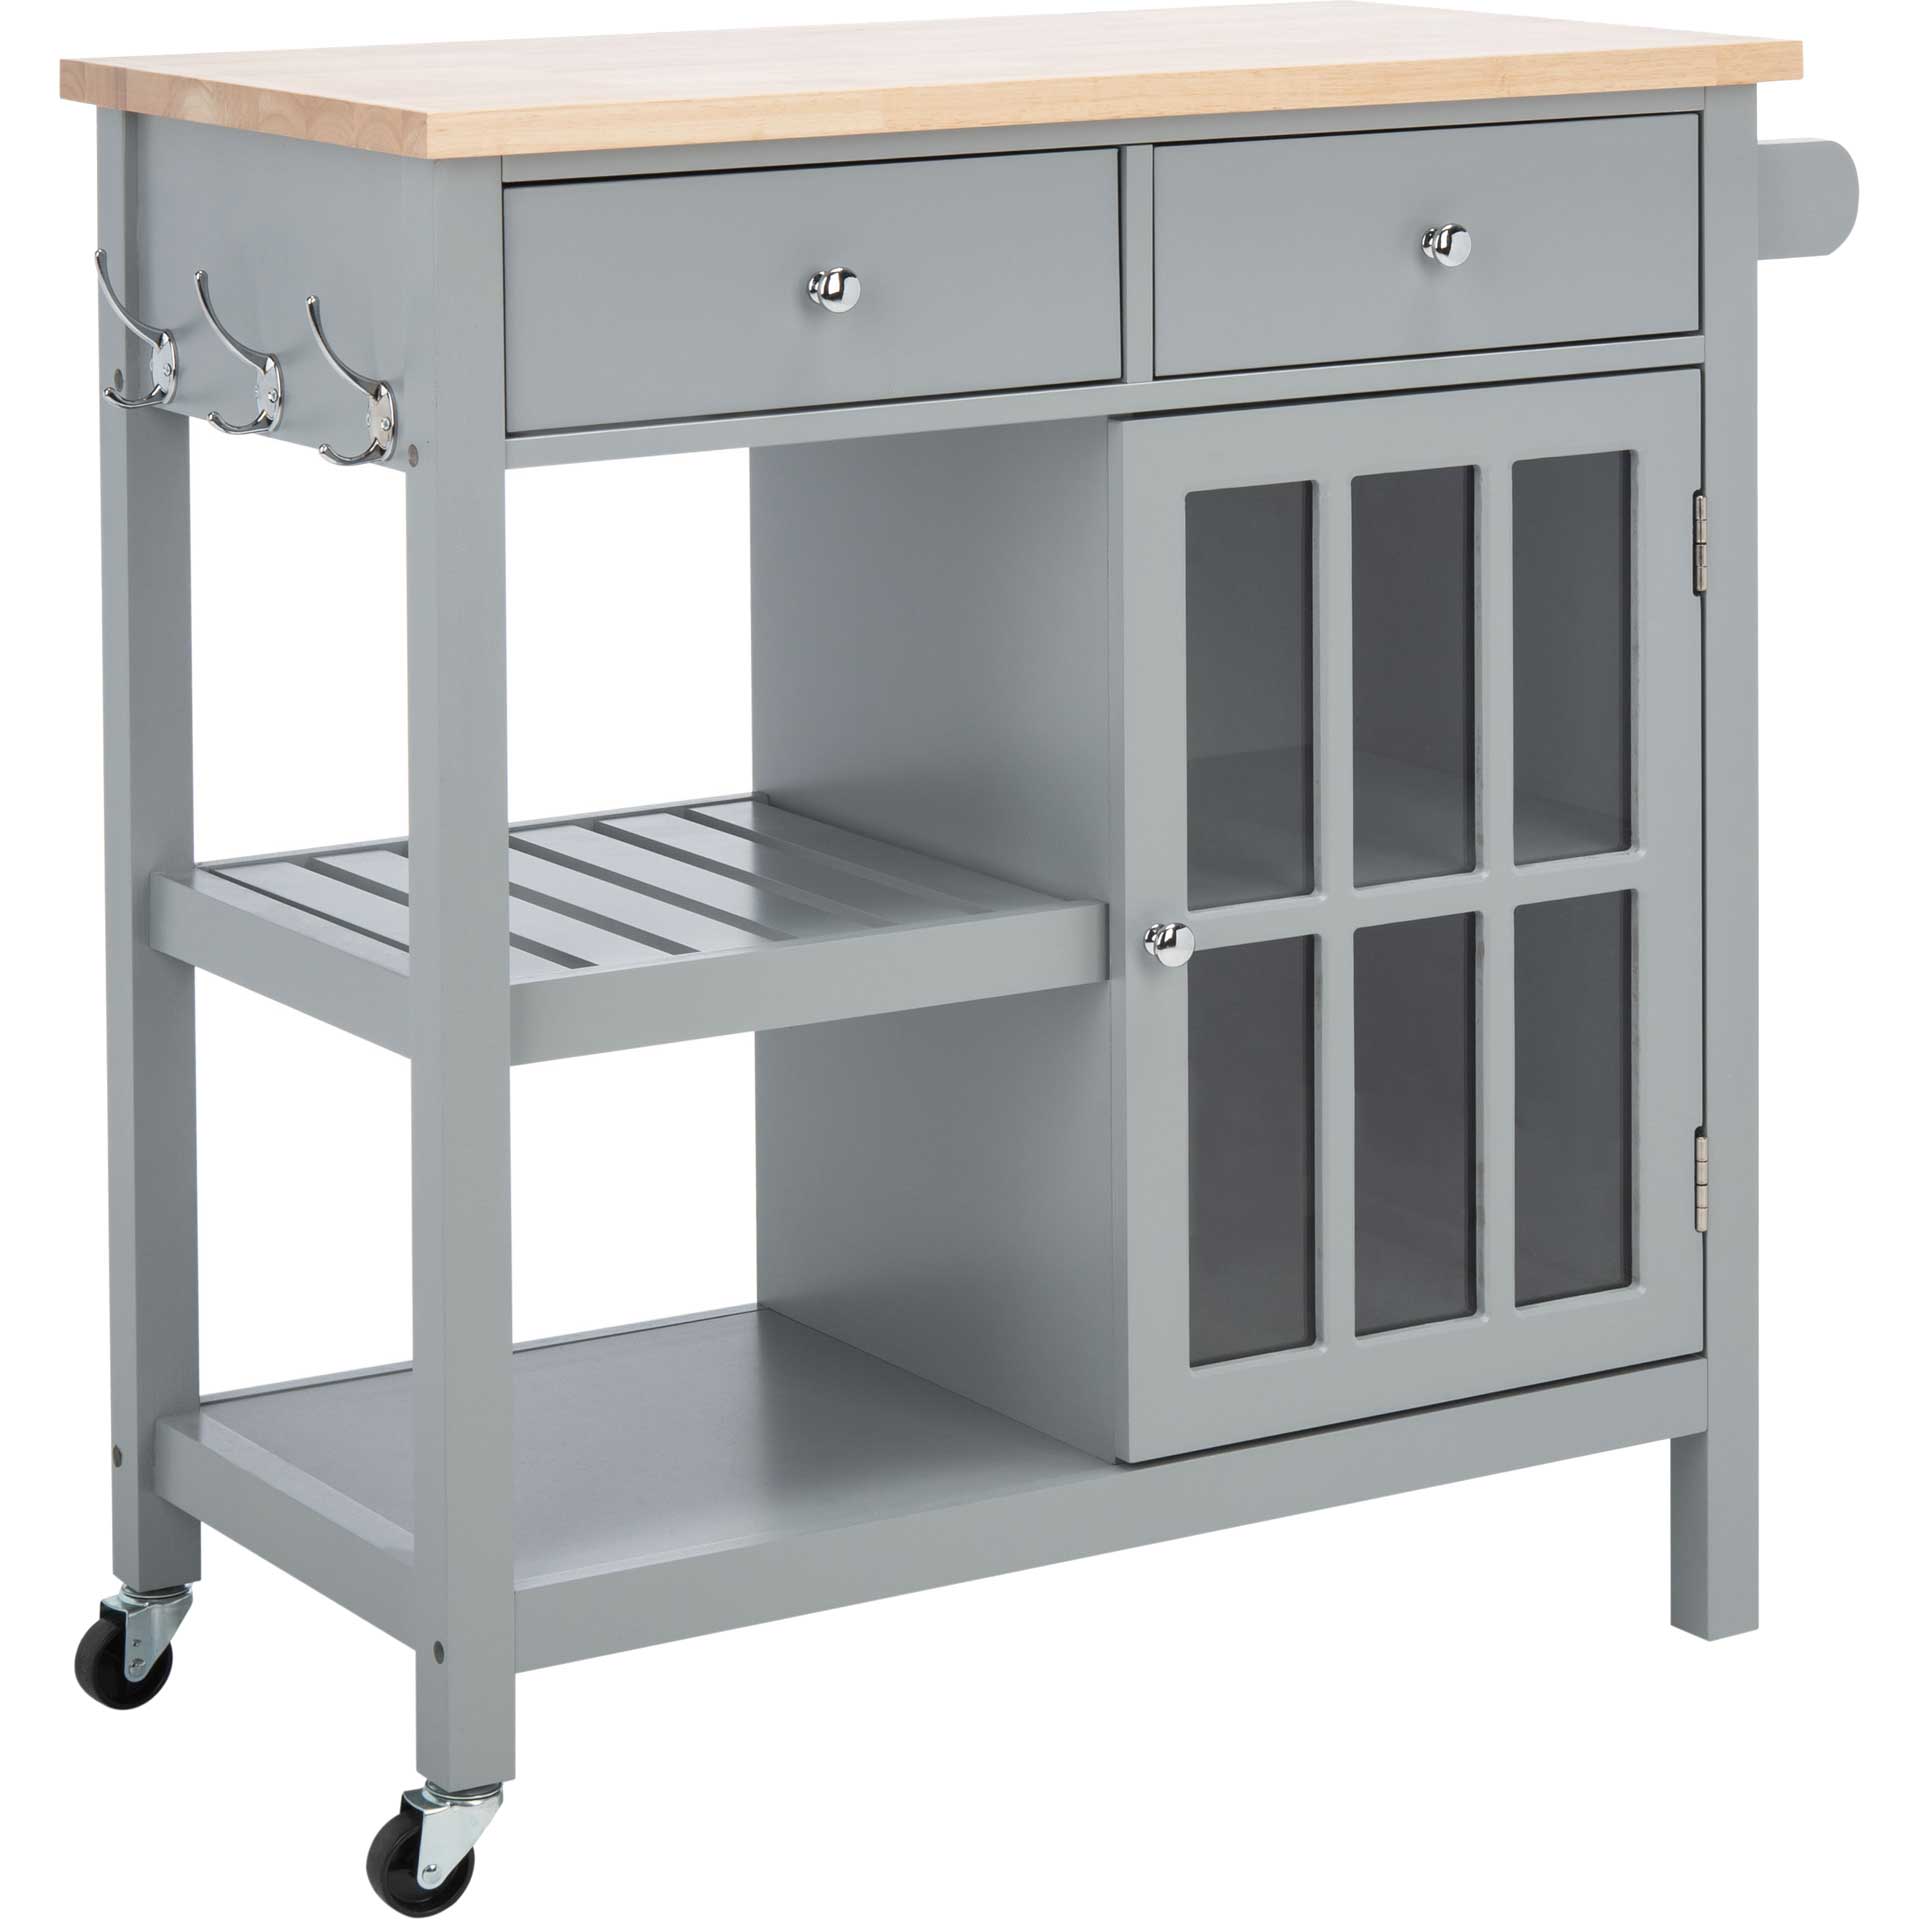 Lodi 1 Door 2 Drawer 2 Shelf Kitchen Cart Gray/Natural